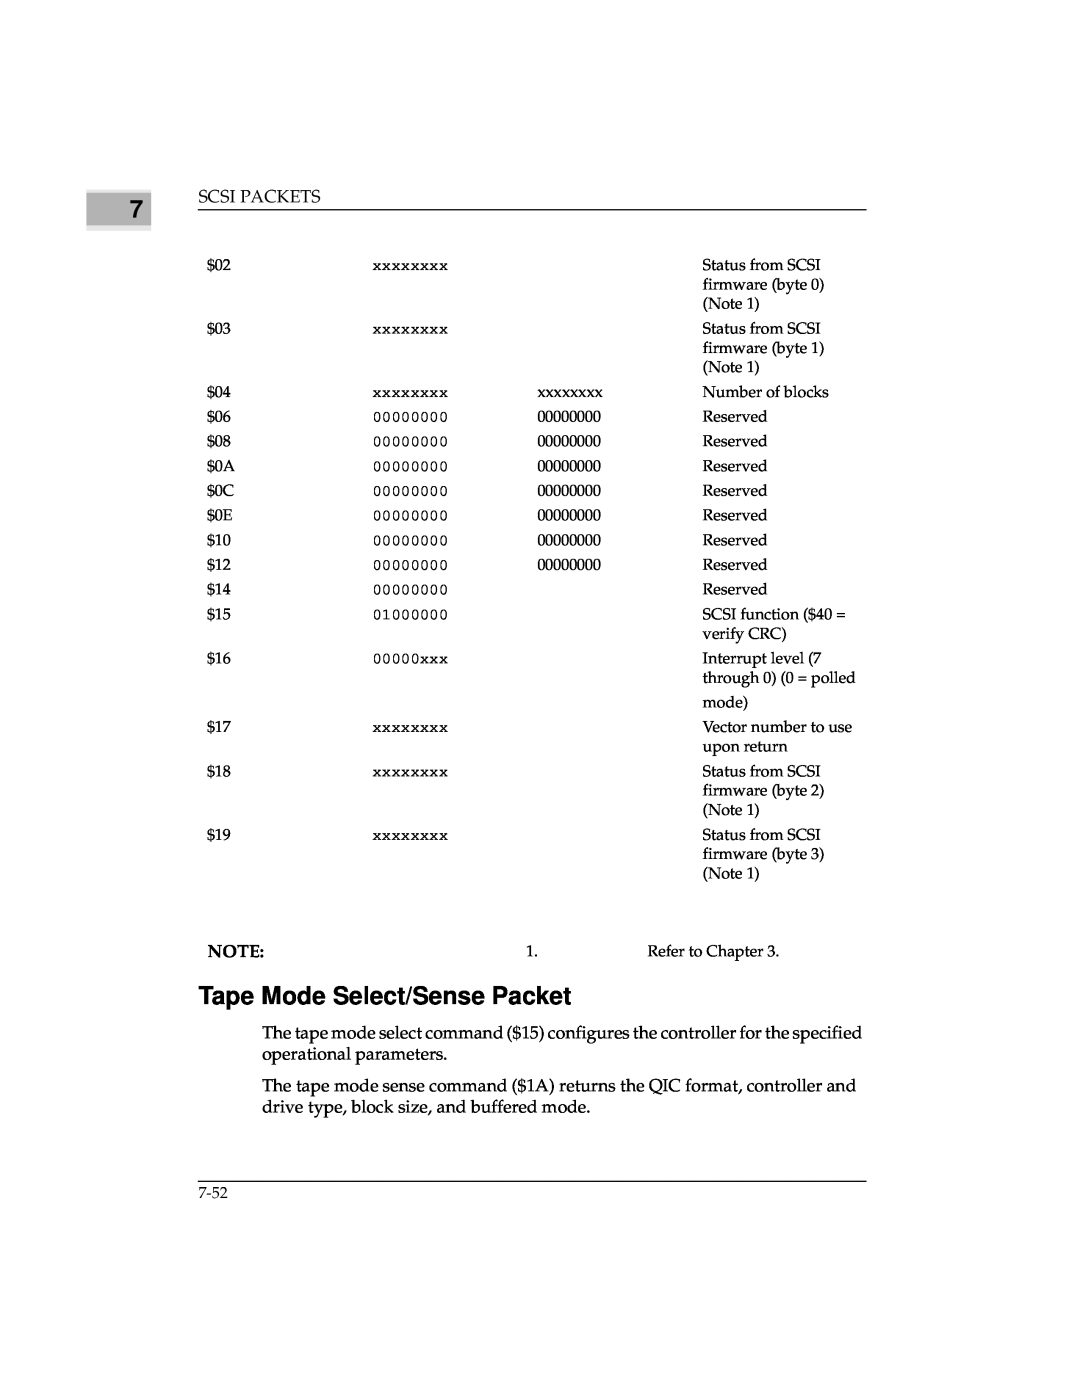 Emerson MVME147 manual Tape Mode Select/Sense Packet 